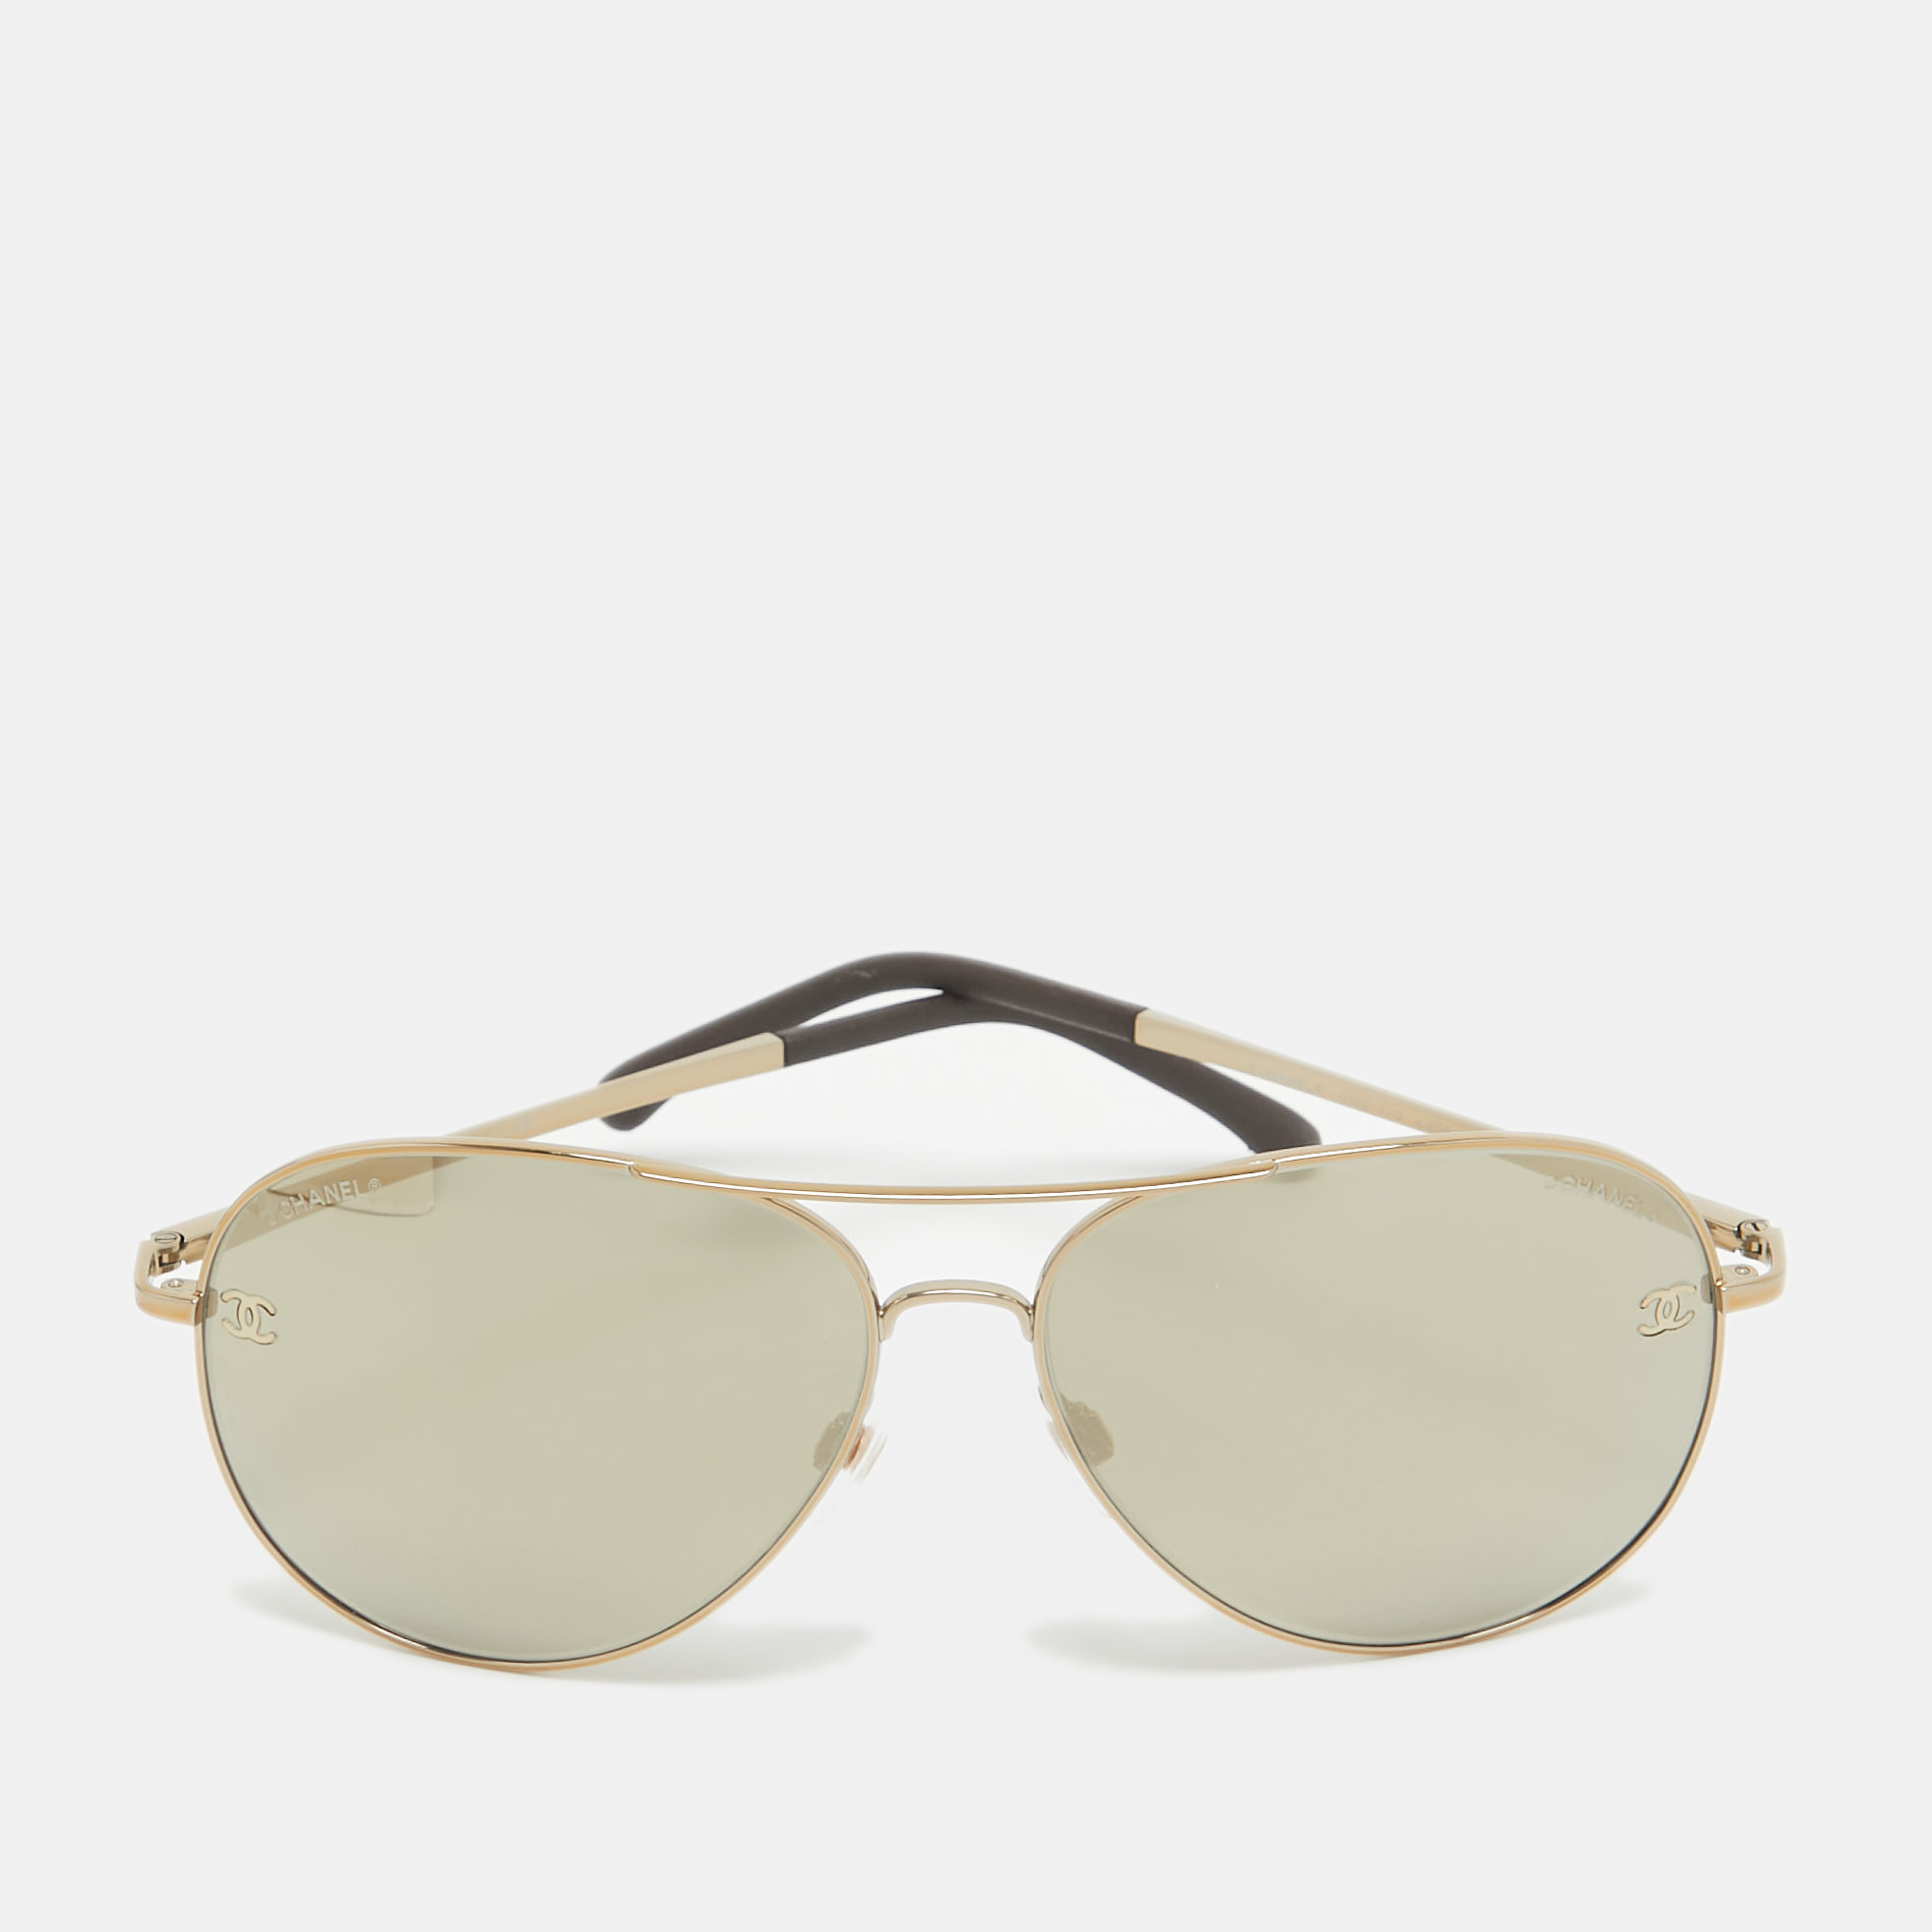 Chanel gold mirrored 4189tq aviator sunglasses